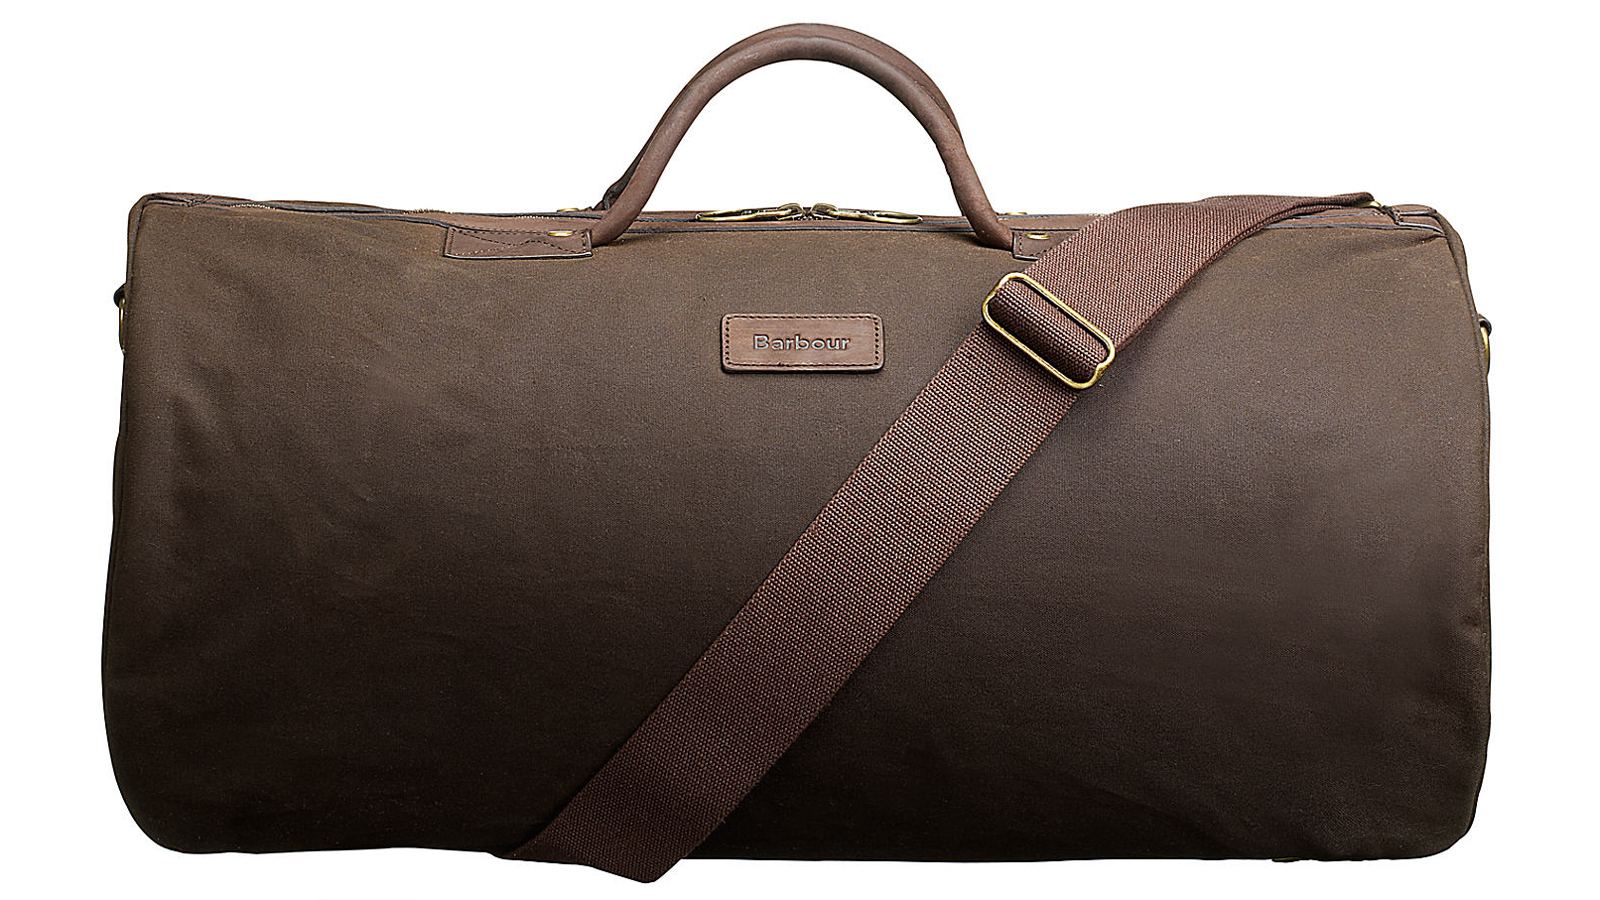 Best Travel Bag Luxury - Best Design Idea